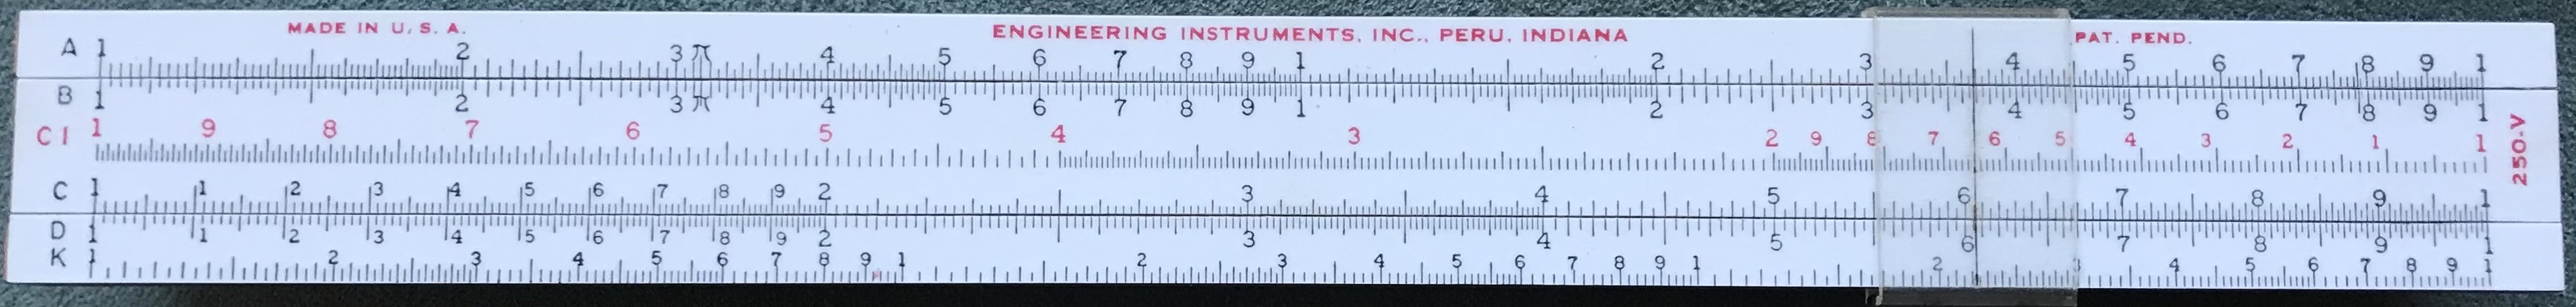 Engineering Instruments, Peru, Indiana, 250-V.